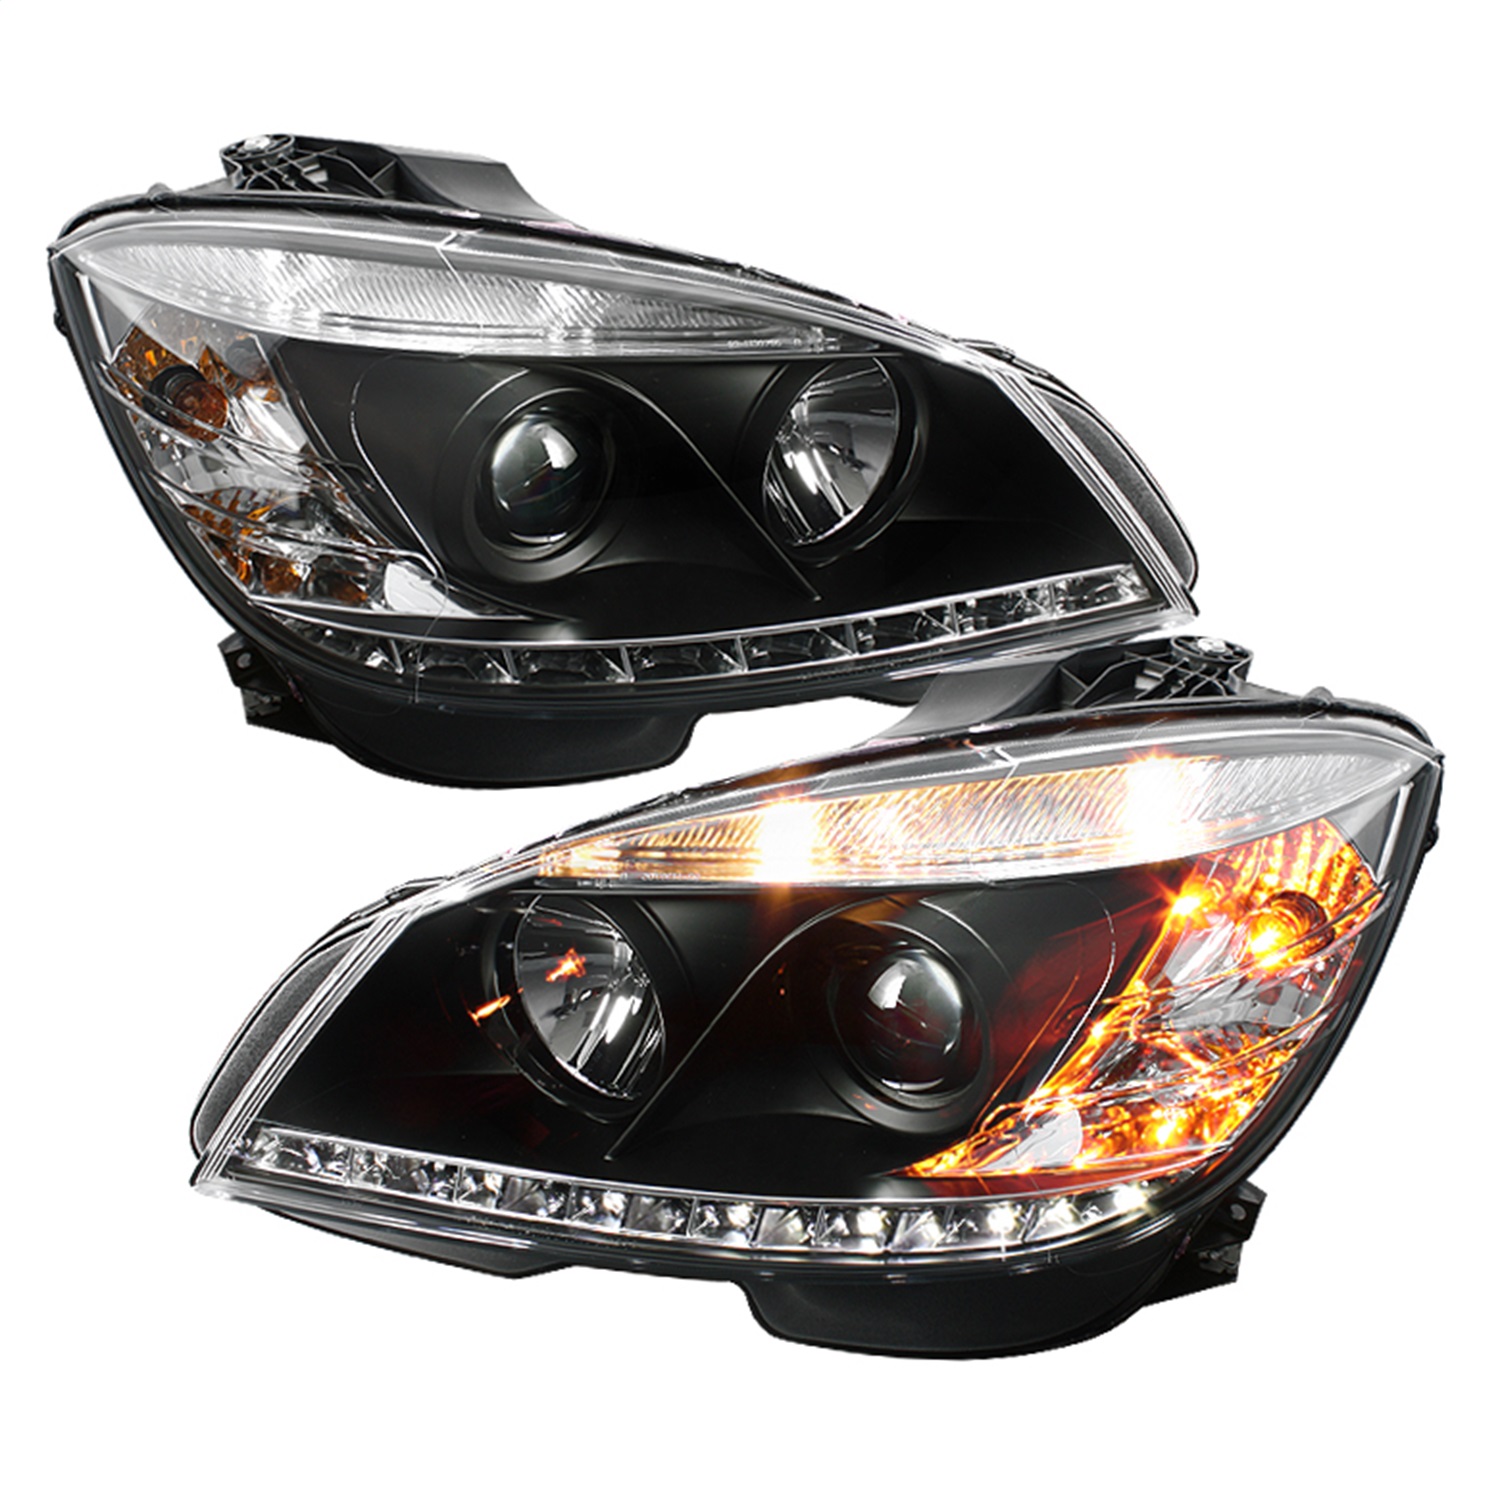 Spyder Auto 5042262 DRL LED Projector Headlights